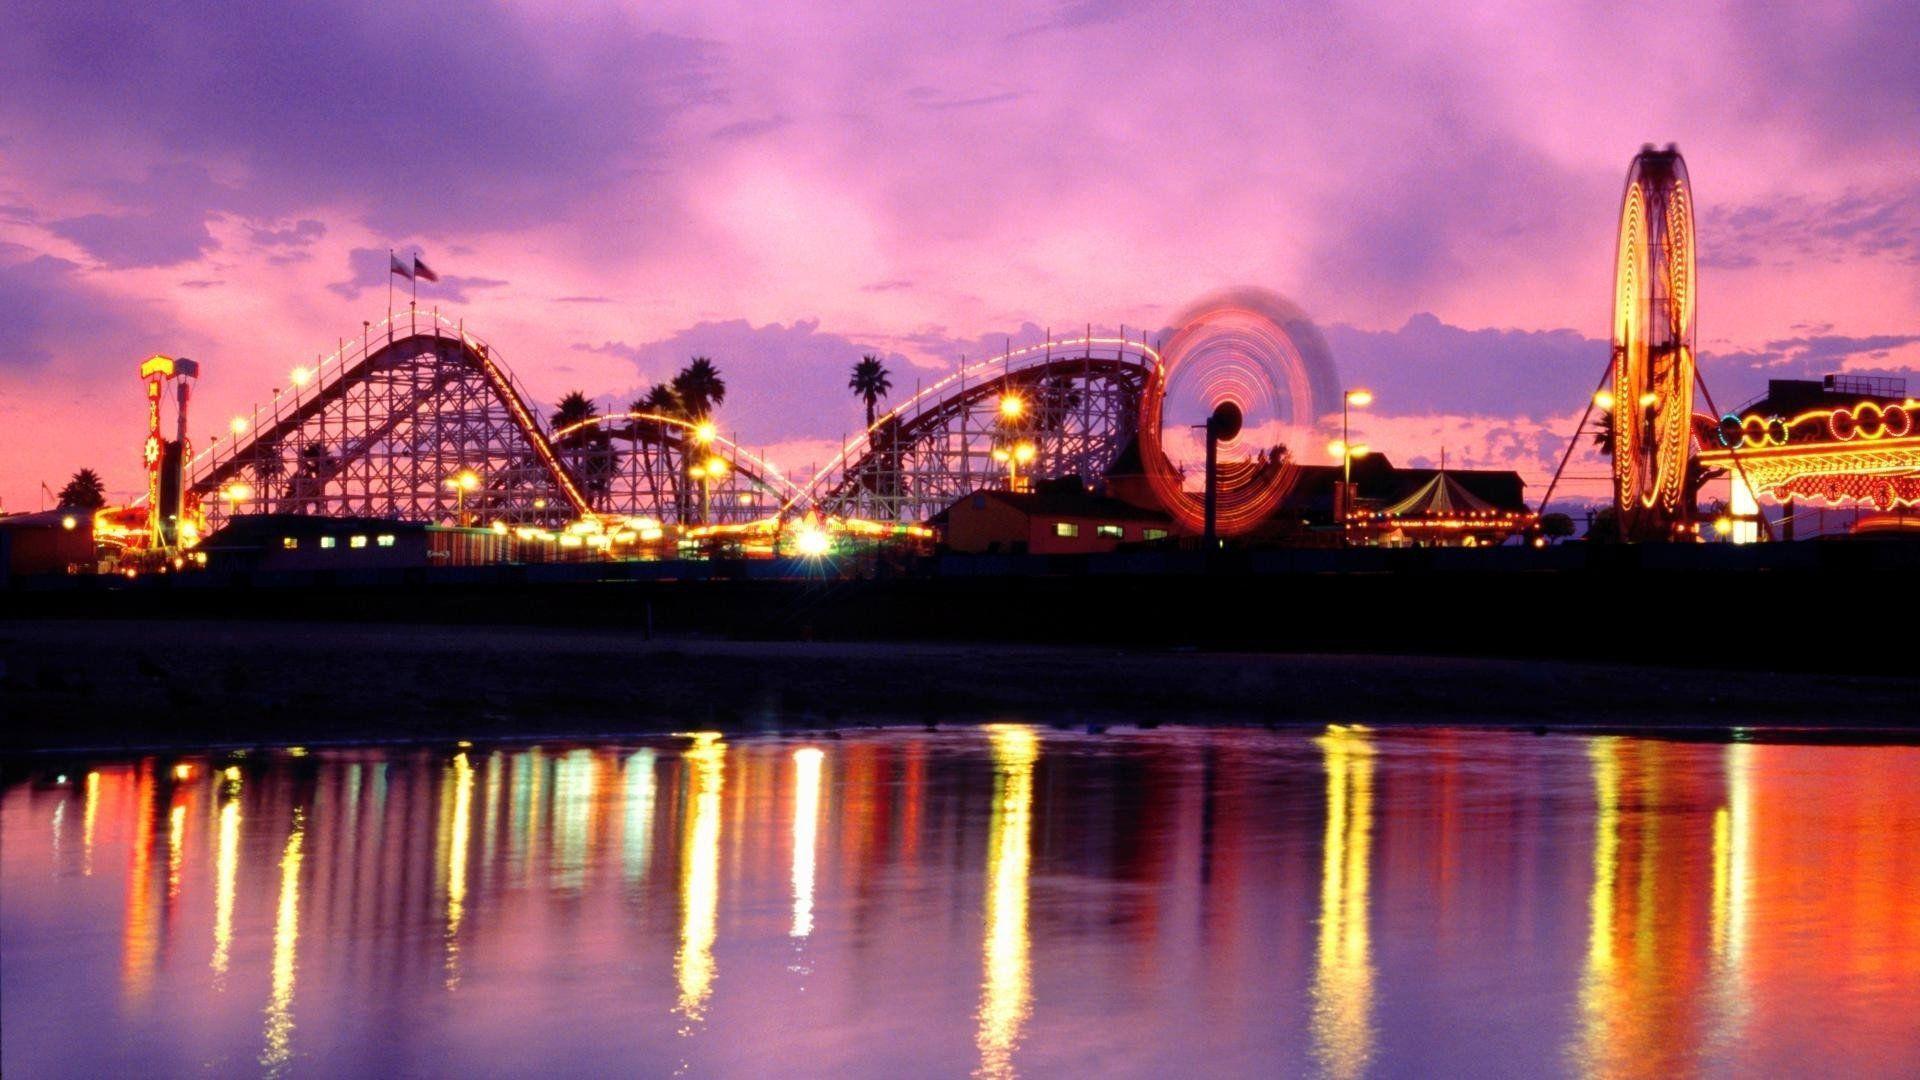 Description about wallpaper roller coaster, amusement park, night, the city, lights - California, lake